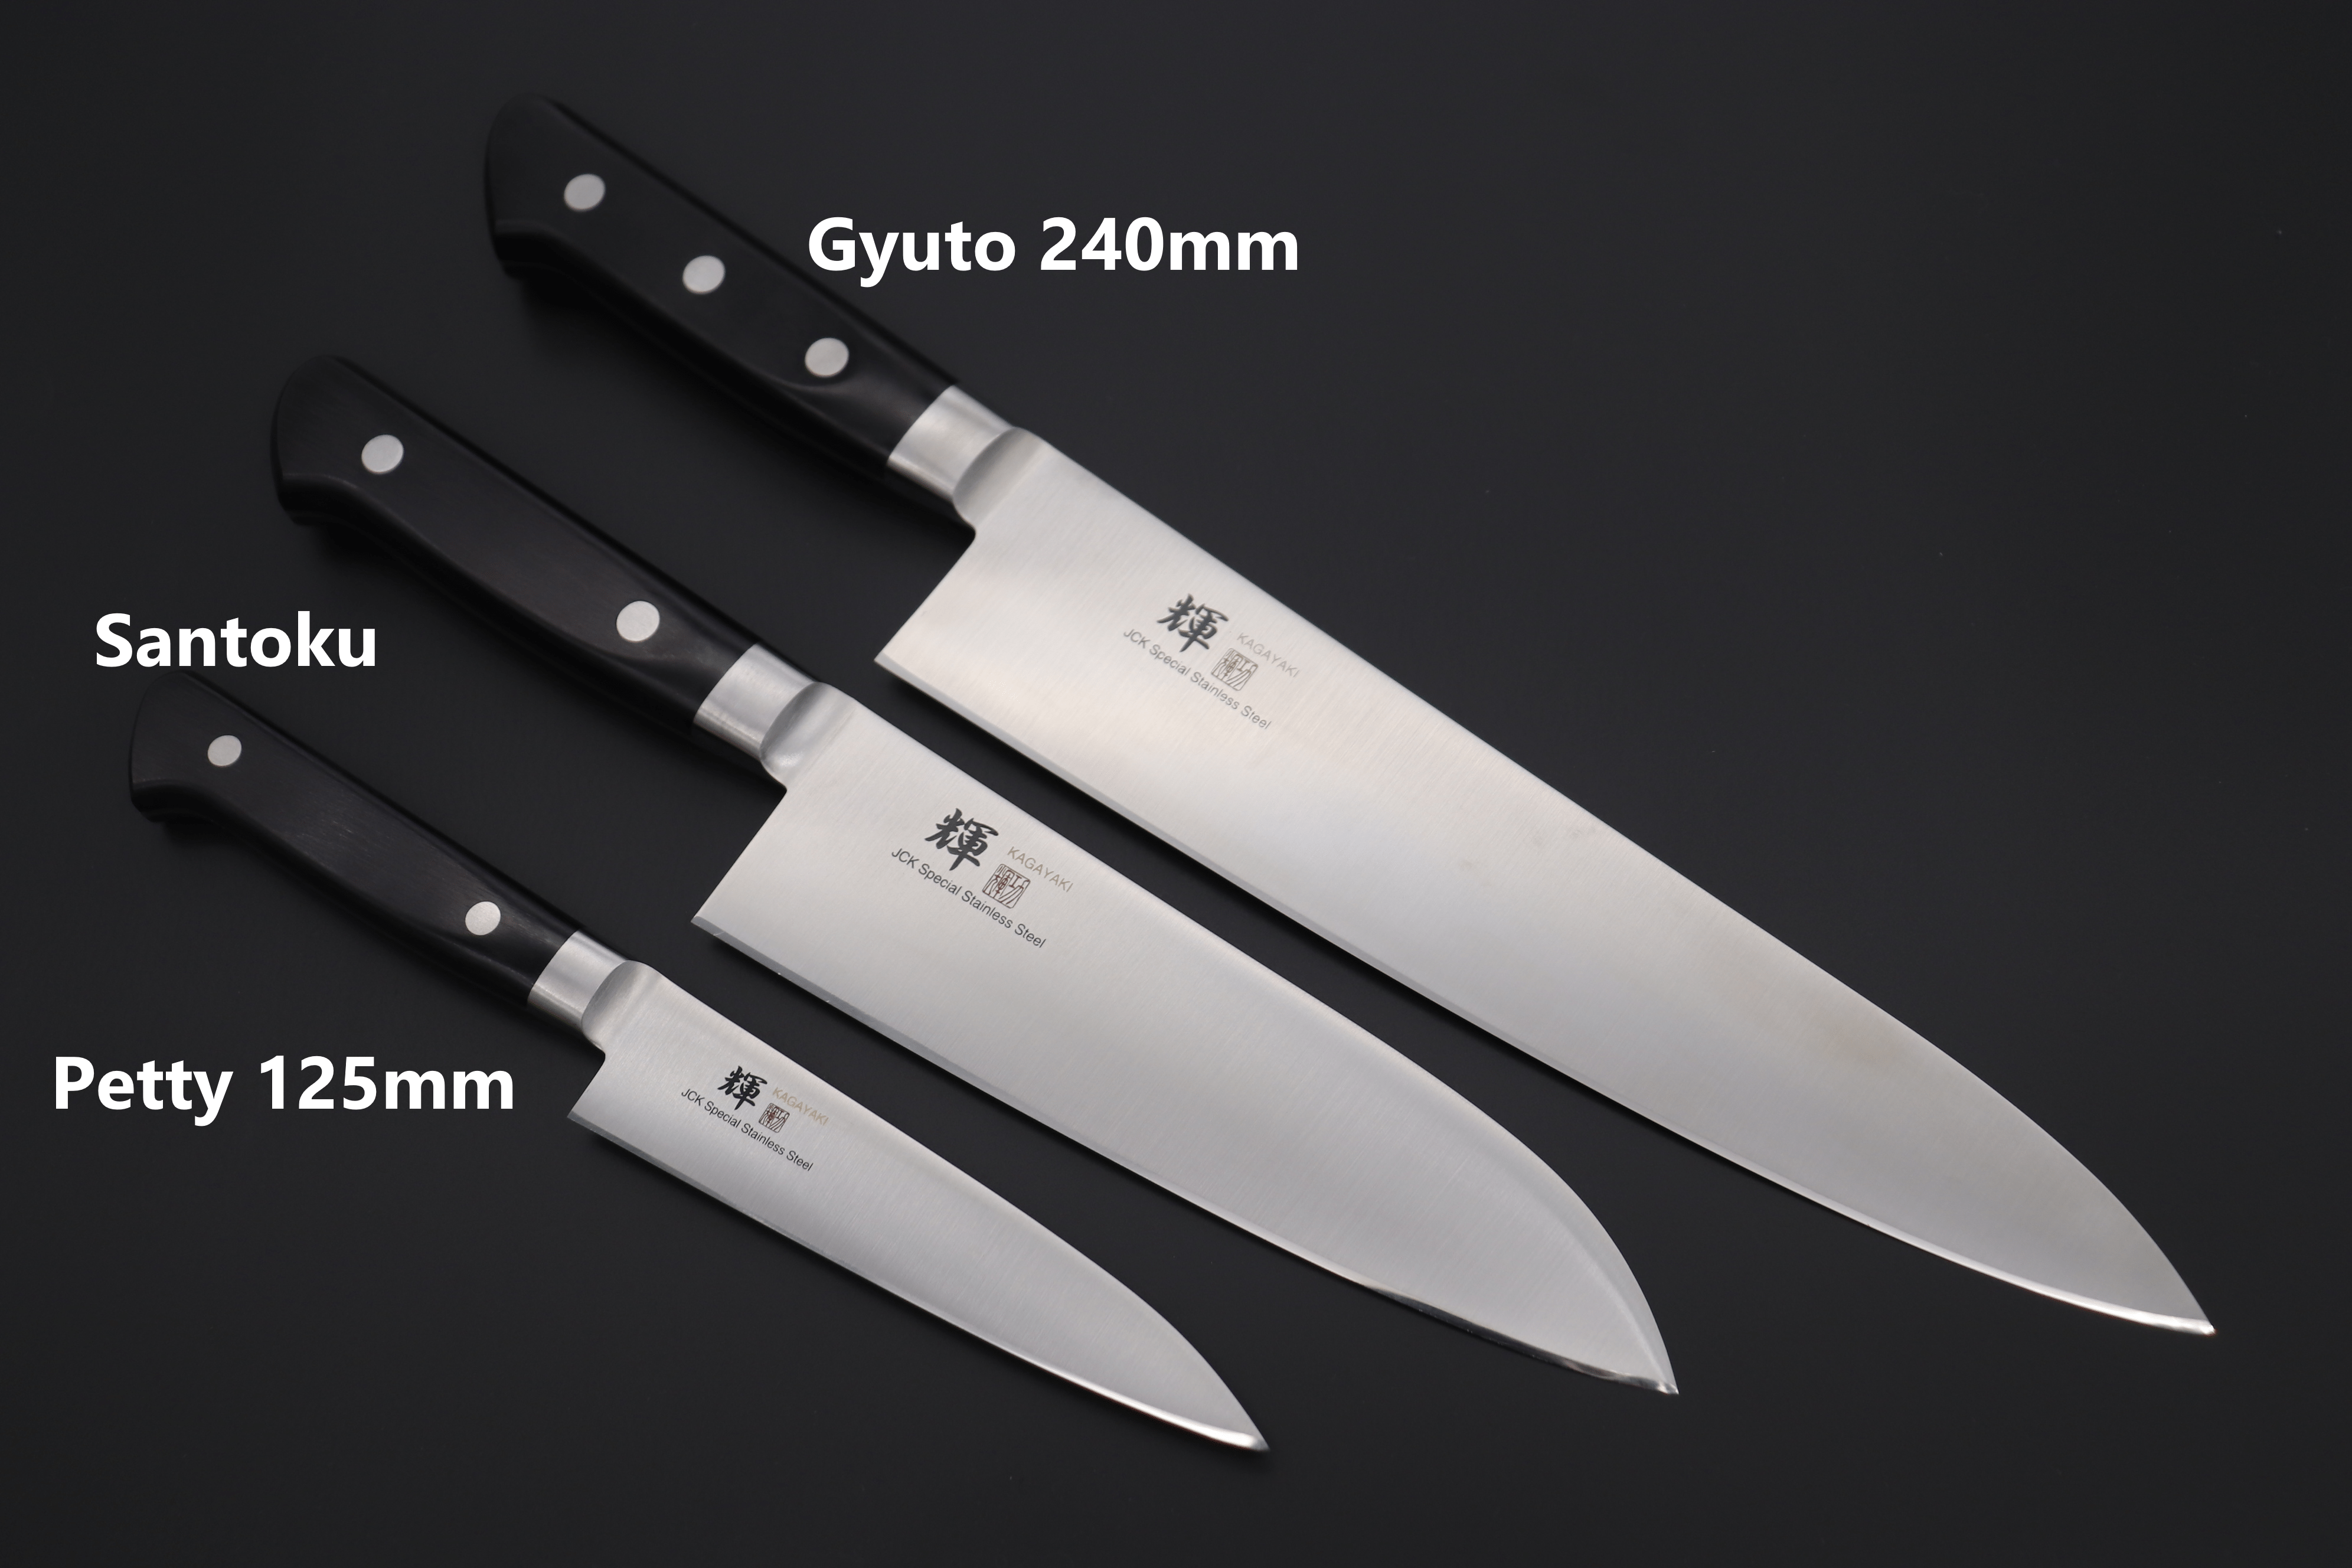 JCK Special Set First Japanese Knife Set Type II JCK Kagayaki